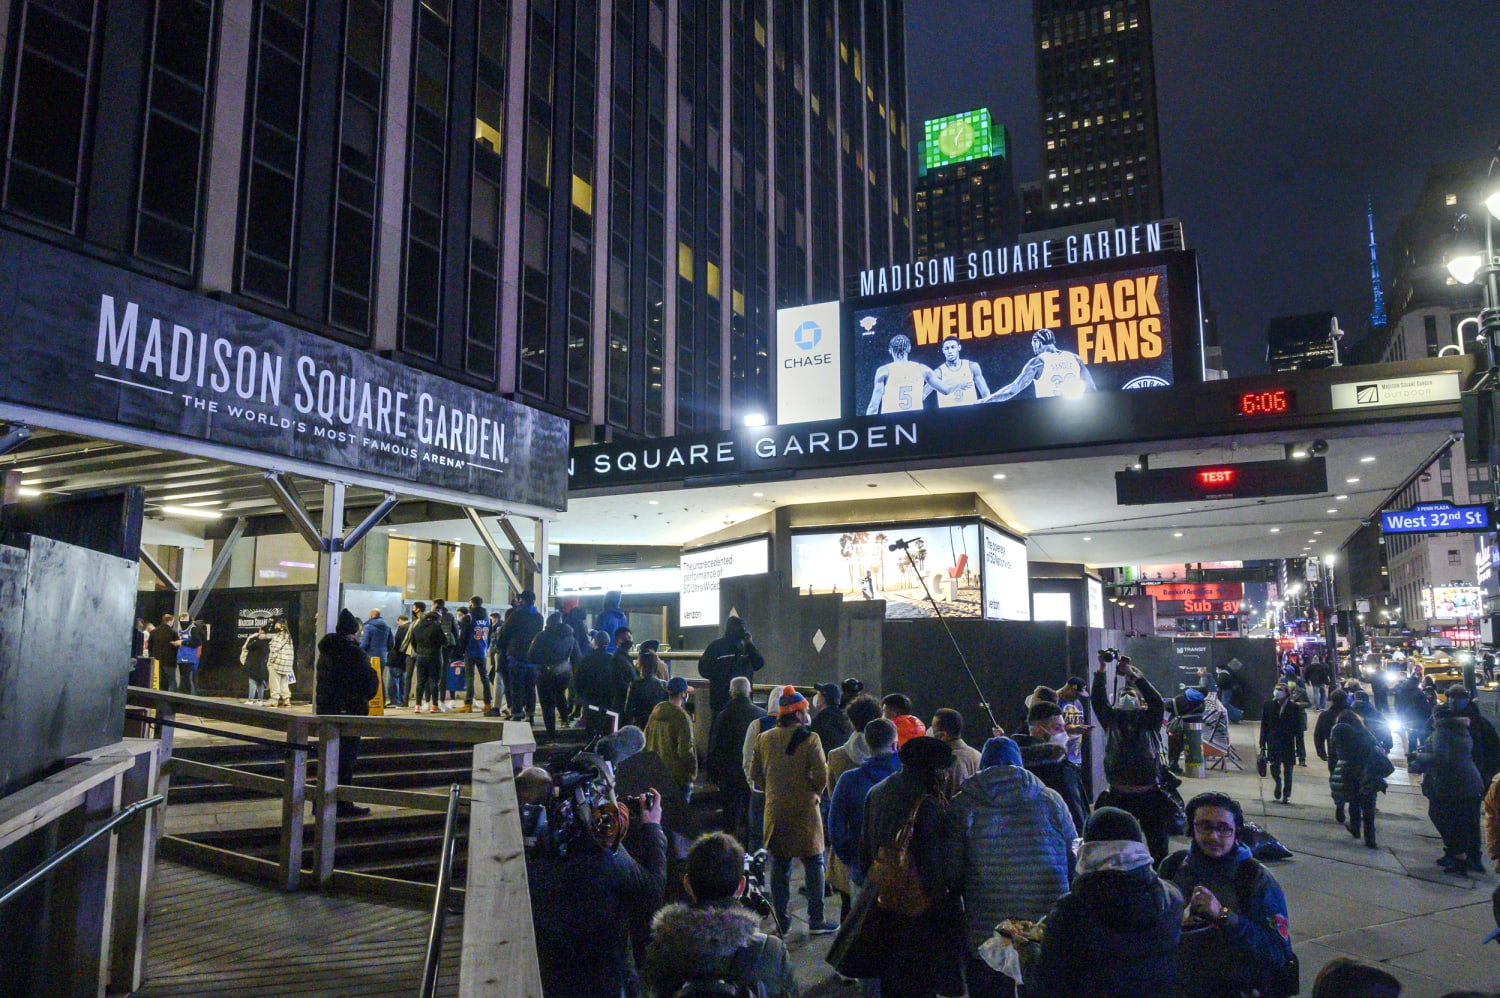 Madison Square Garden doubles down on plaintiffs lawyer ban, even